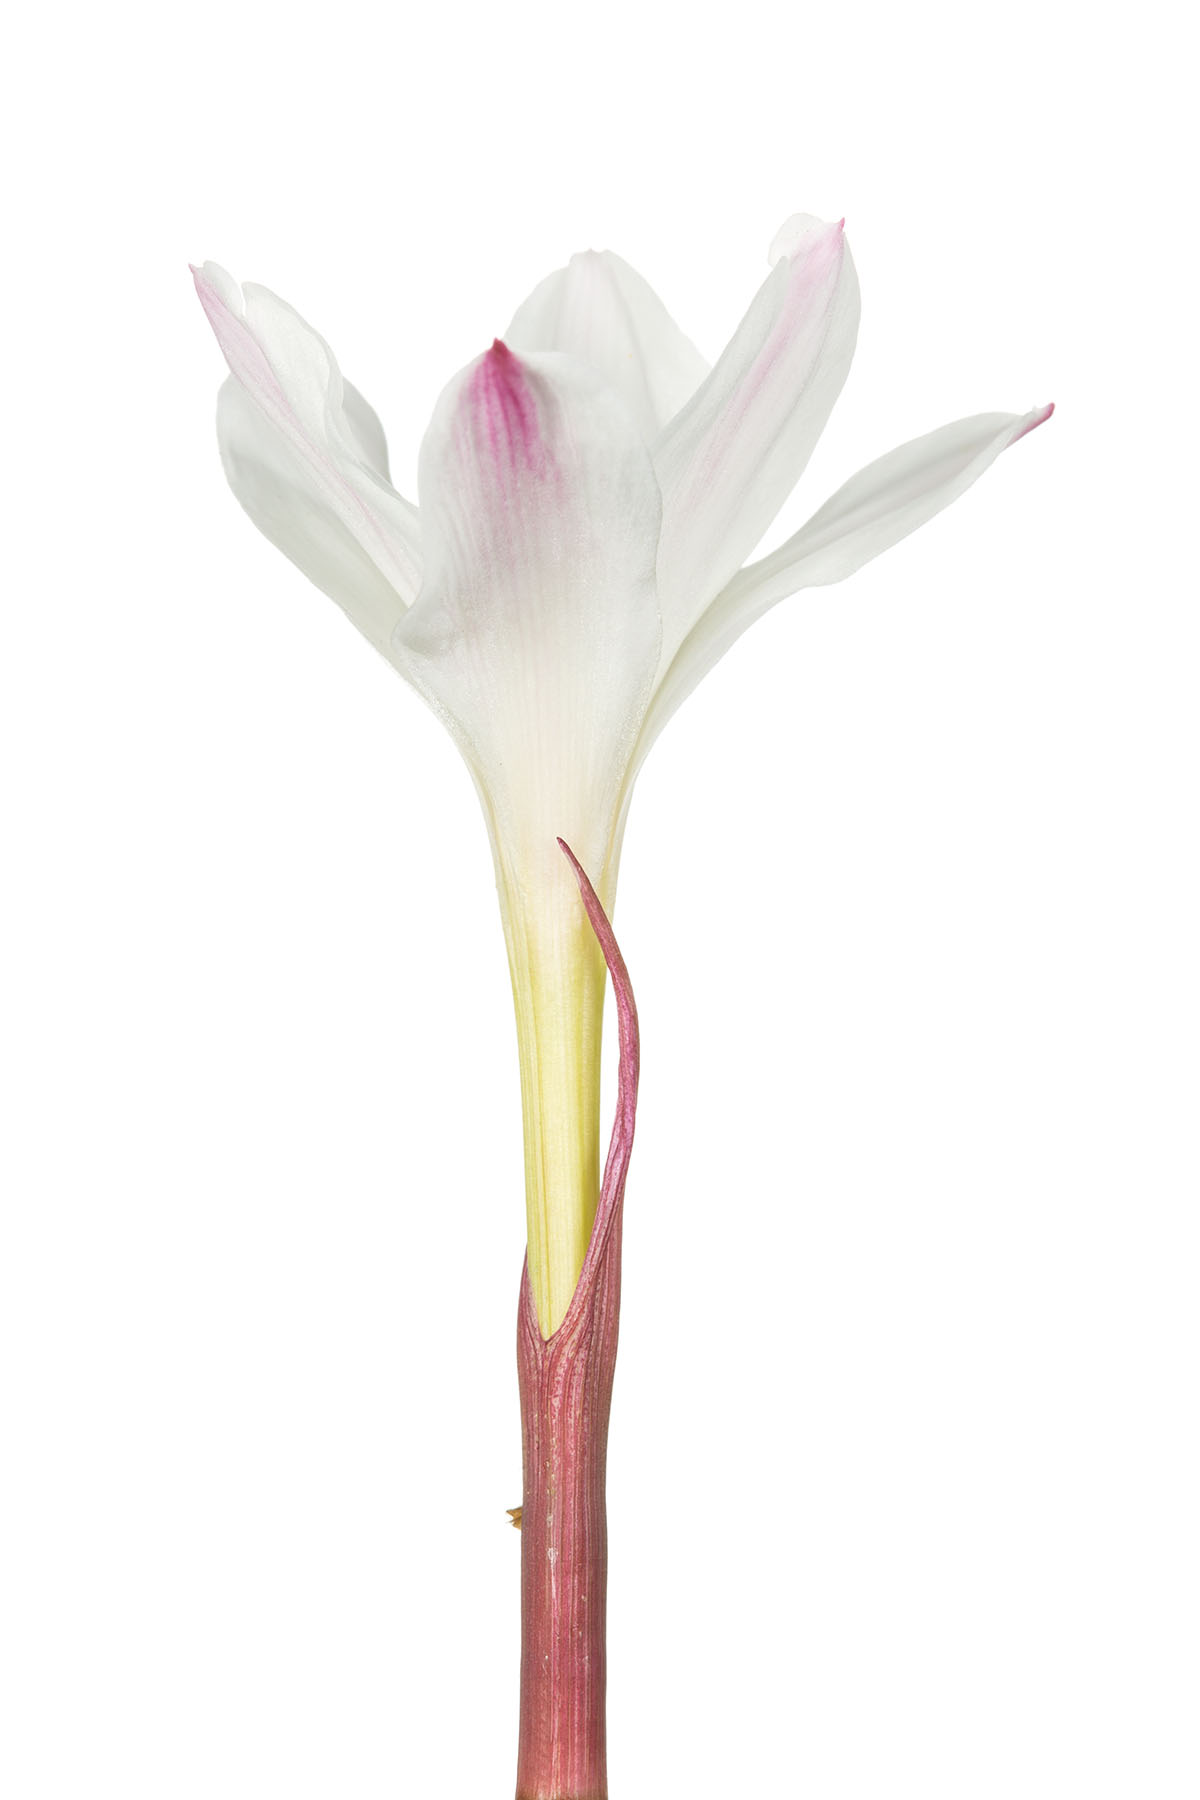 Rain Lily (Cooperia sp)